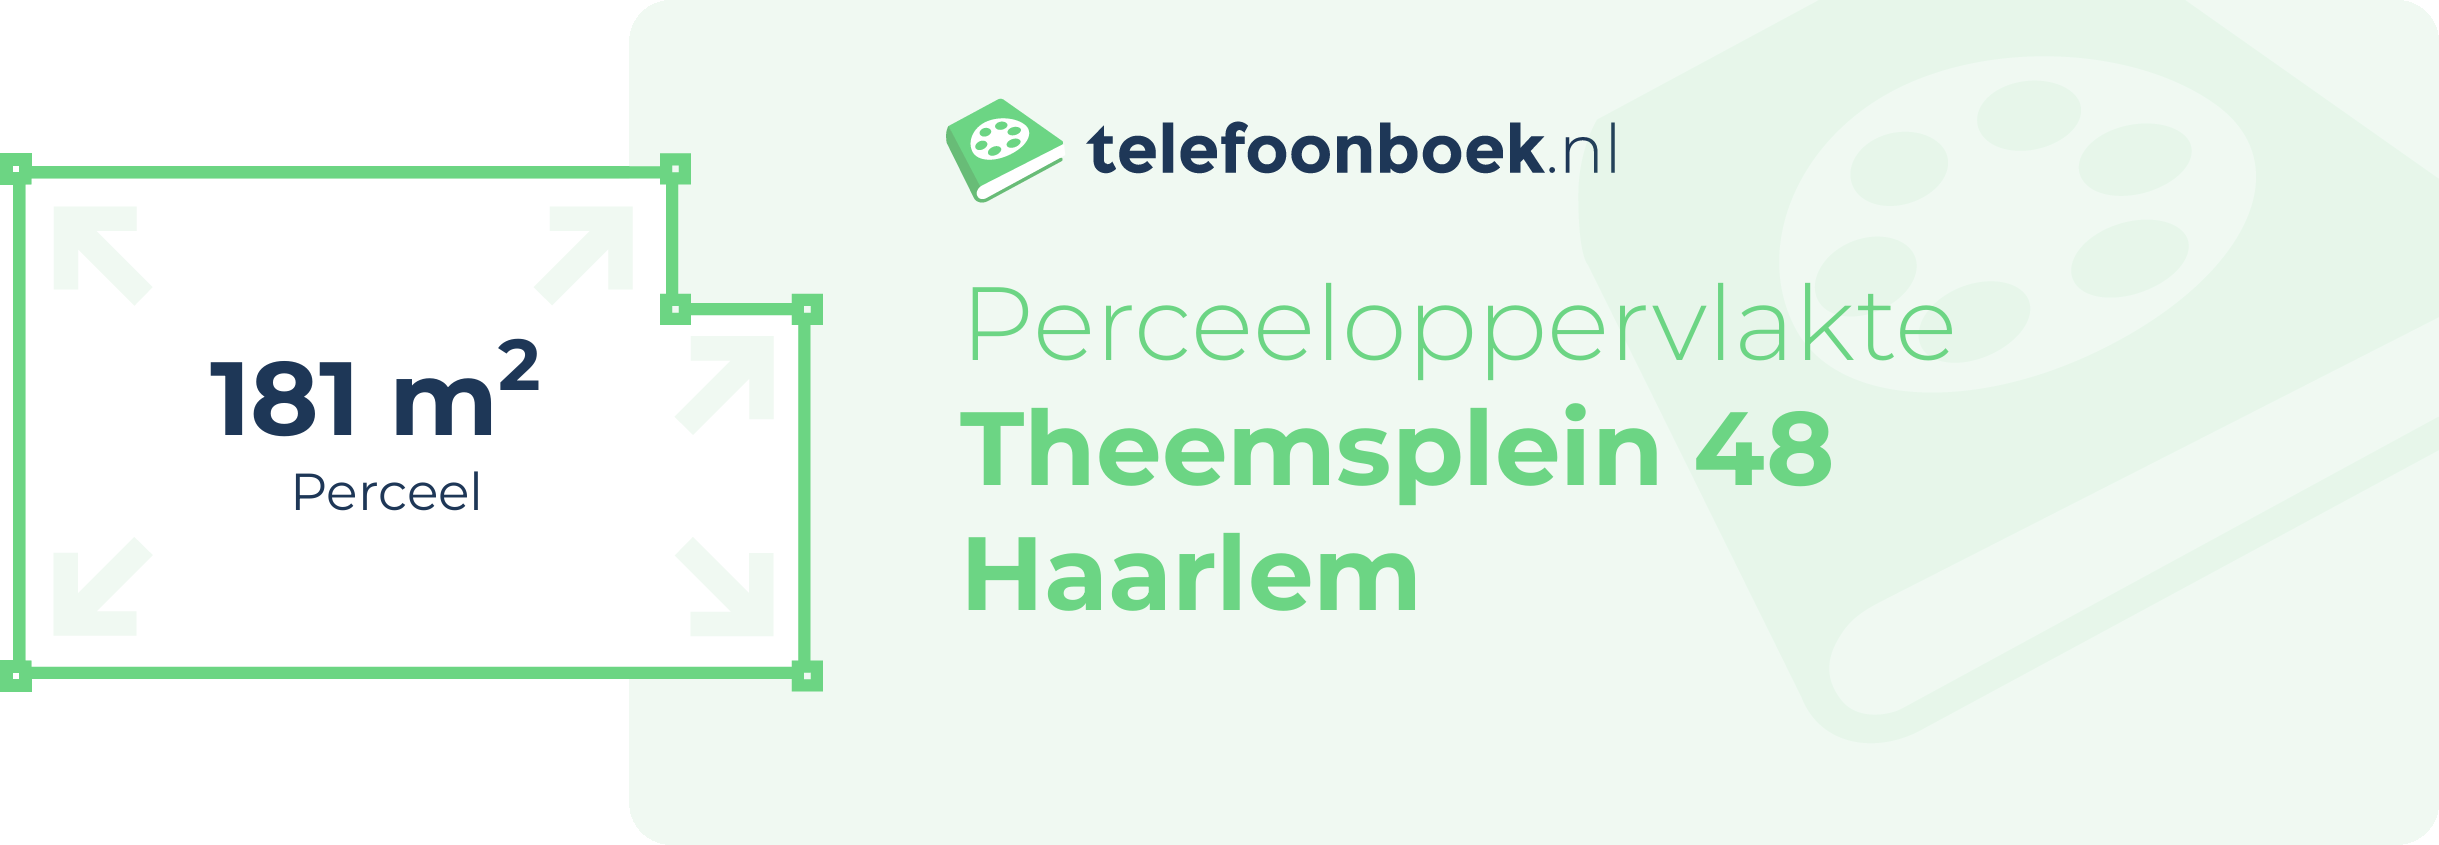 Perceeloppervlakte Theemsplein 48 Haarlem